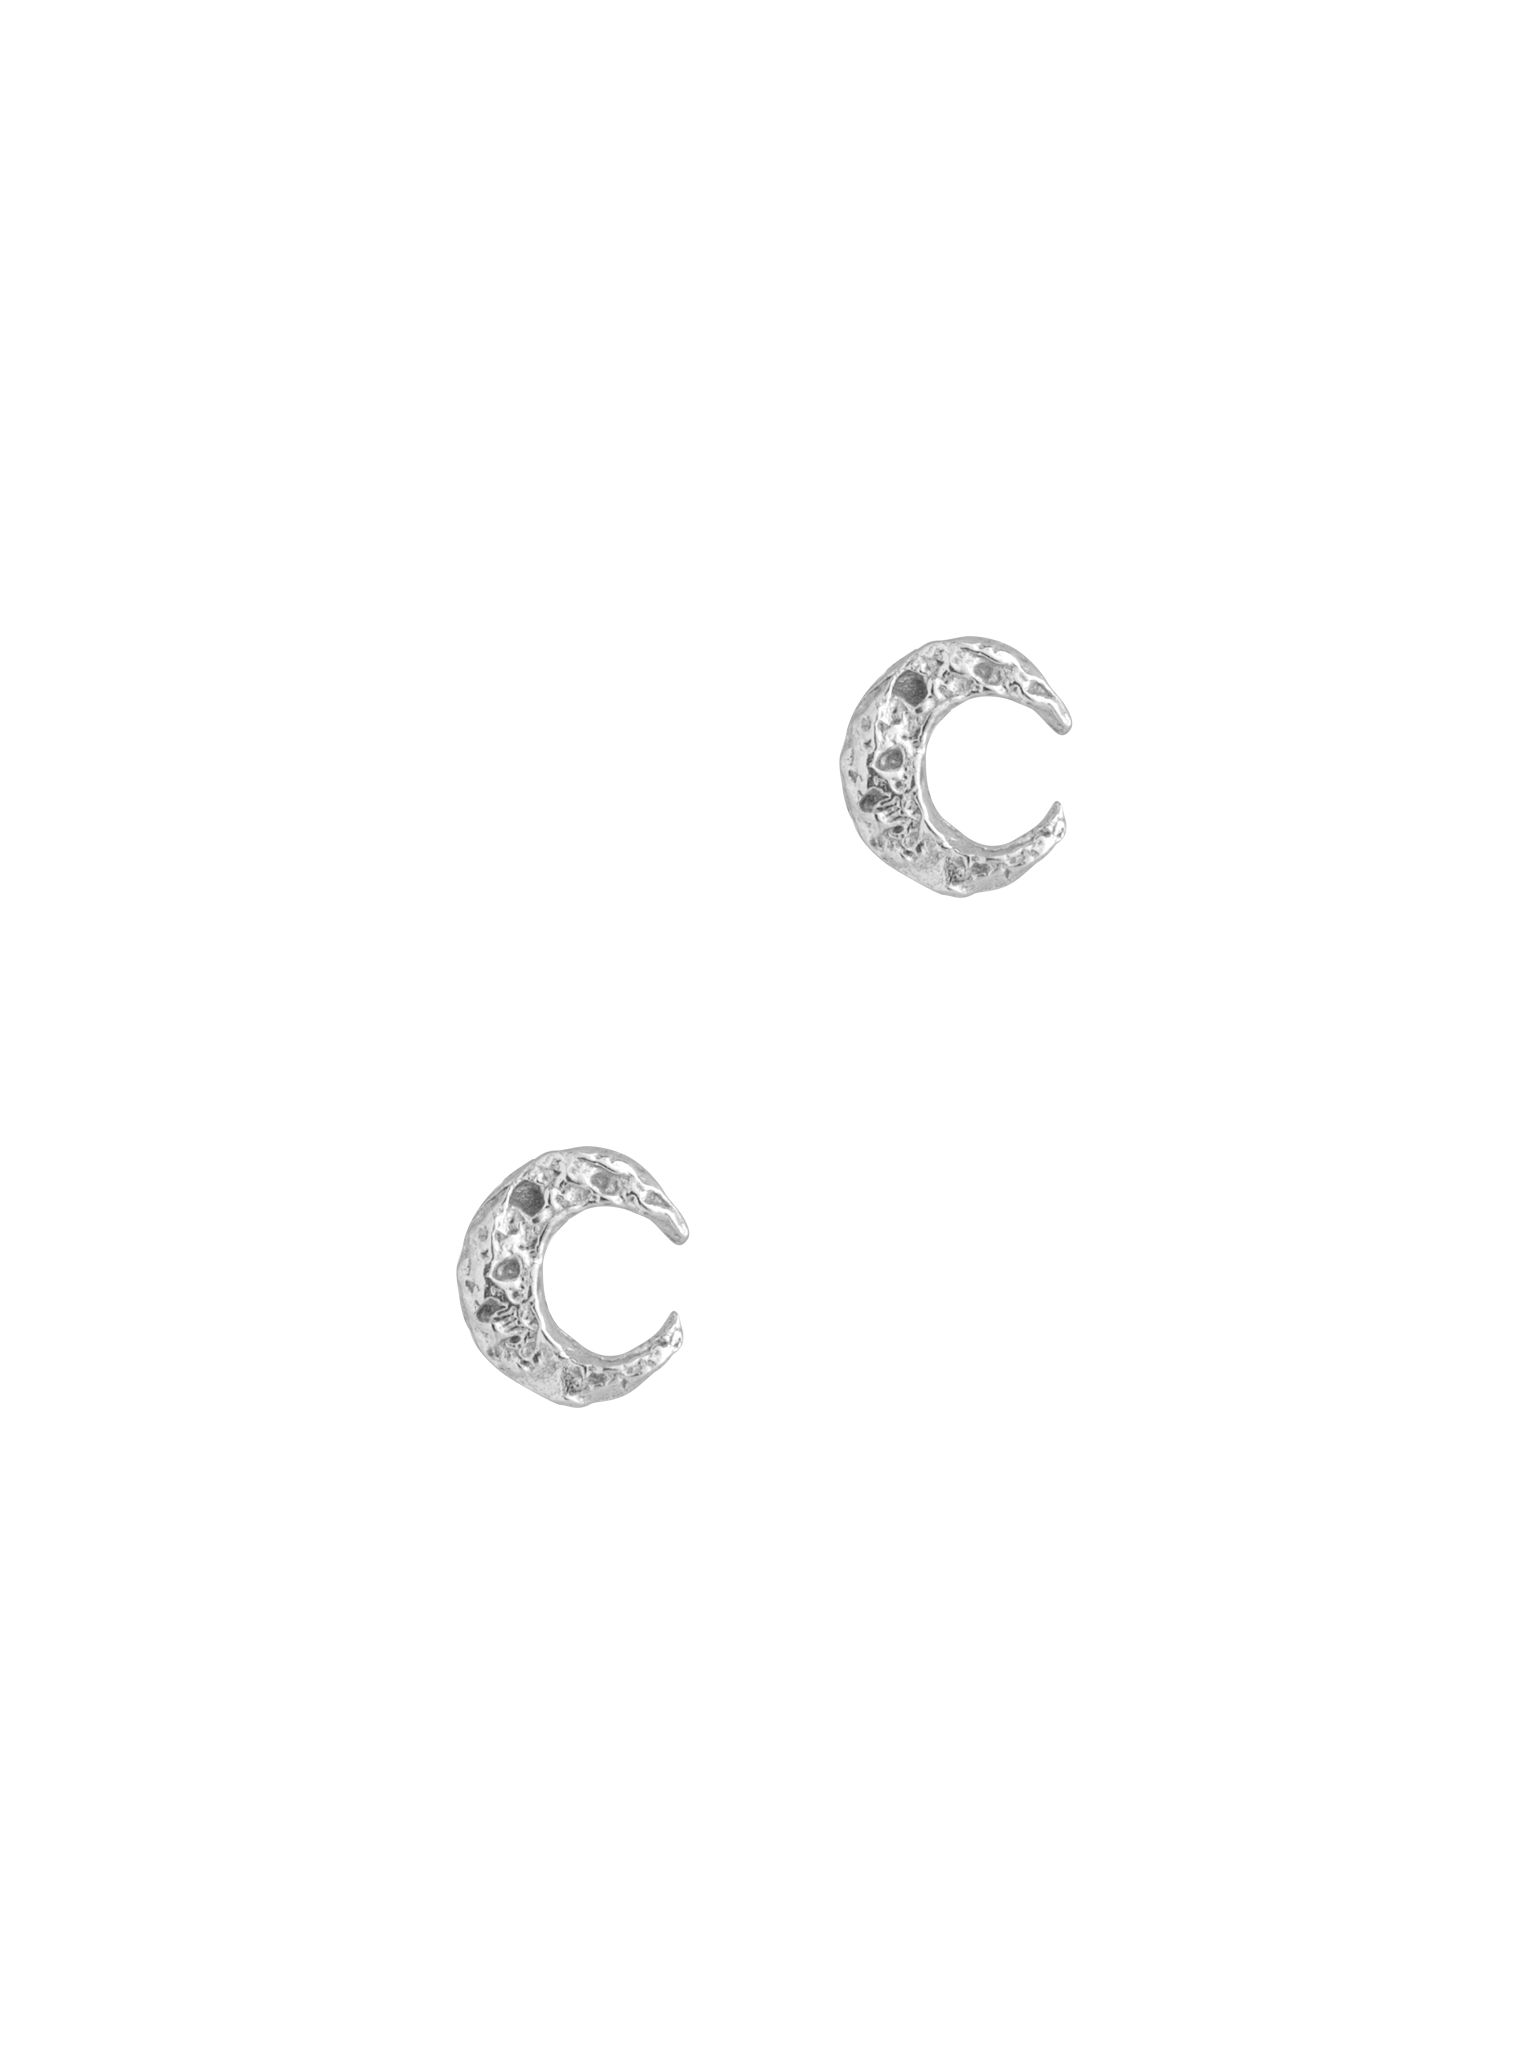 Micro crescent moon stud earrings silver